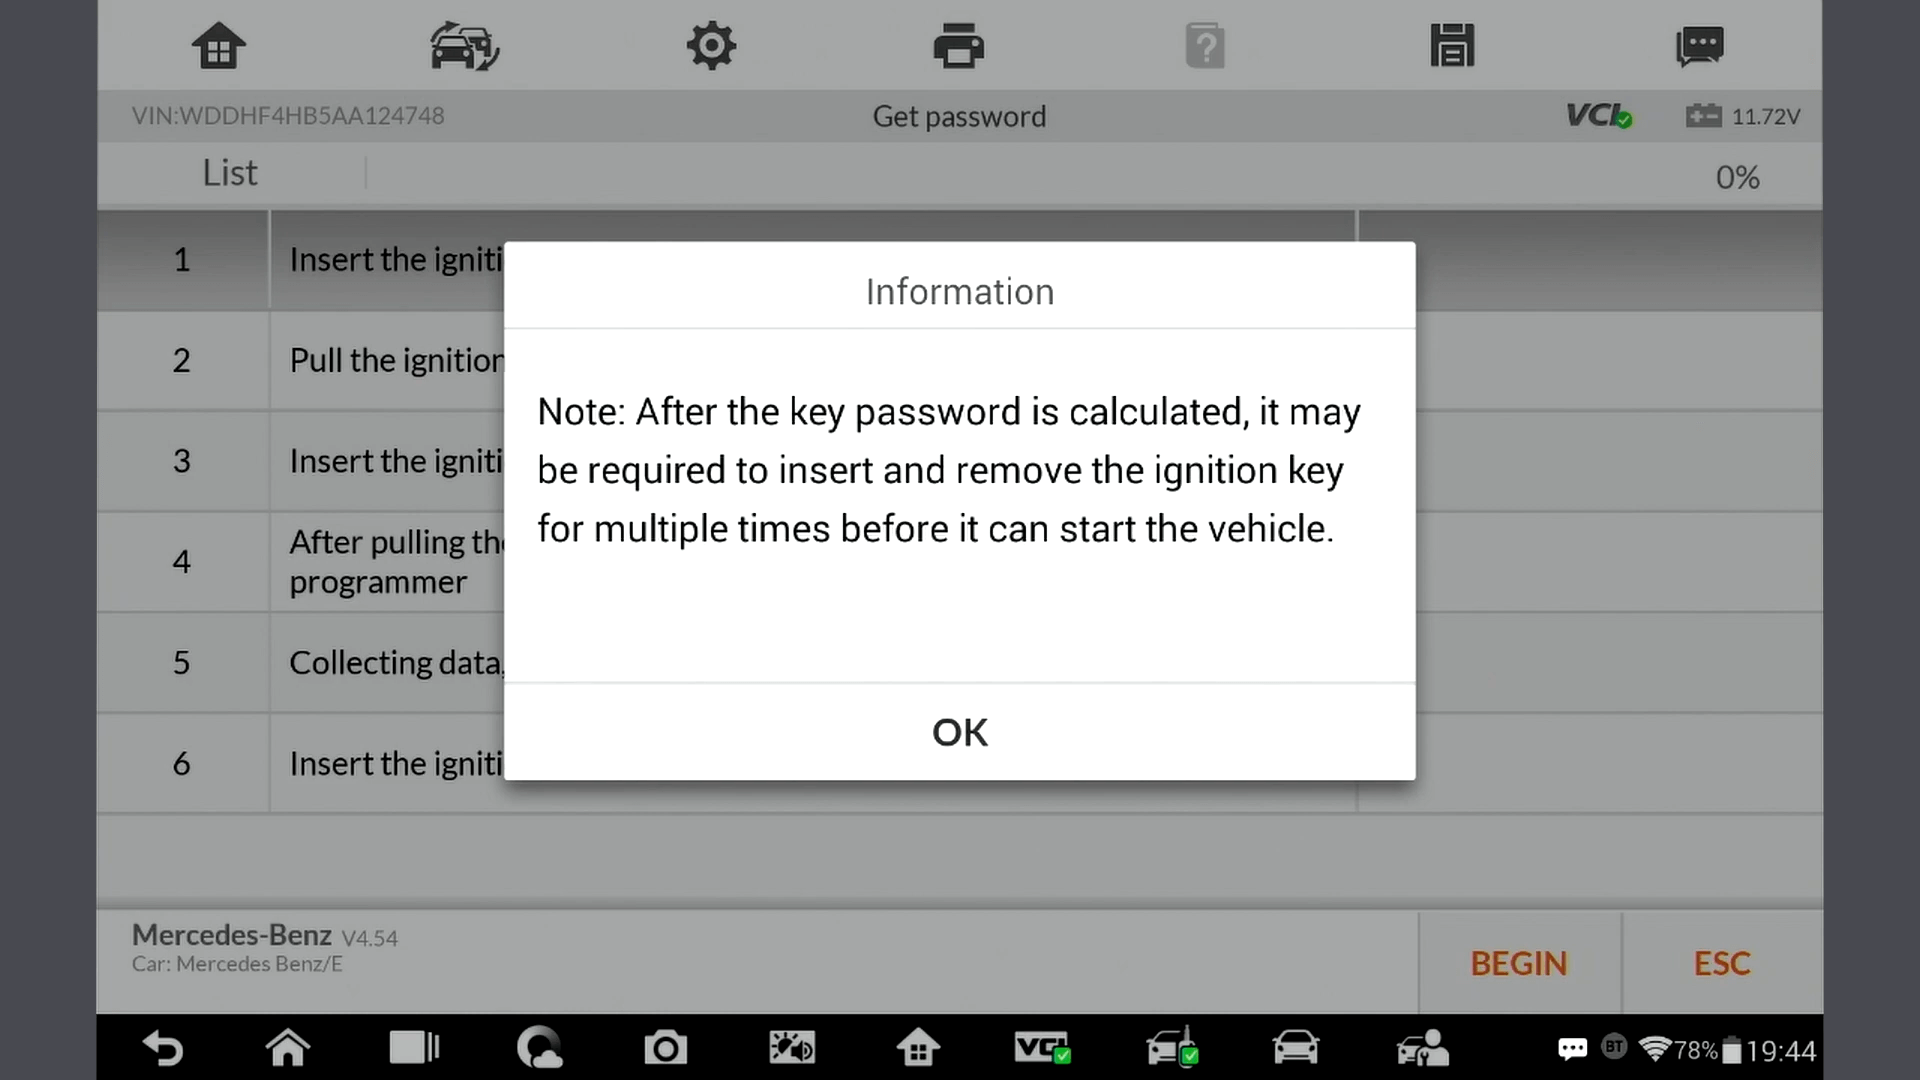 How to Add a New Key for Mercedes - Autel IM608 Add Key